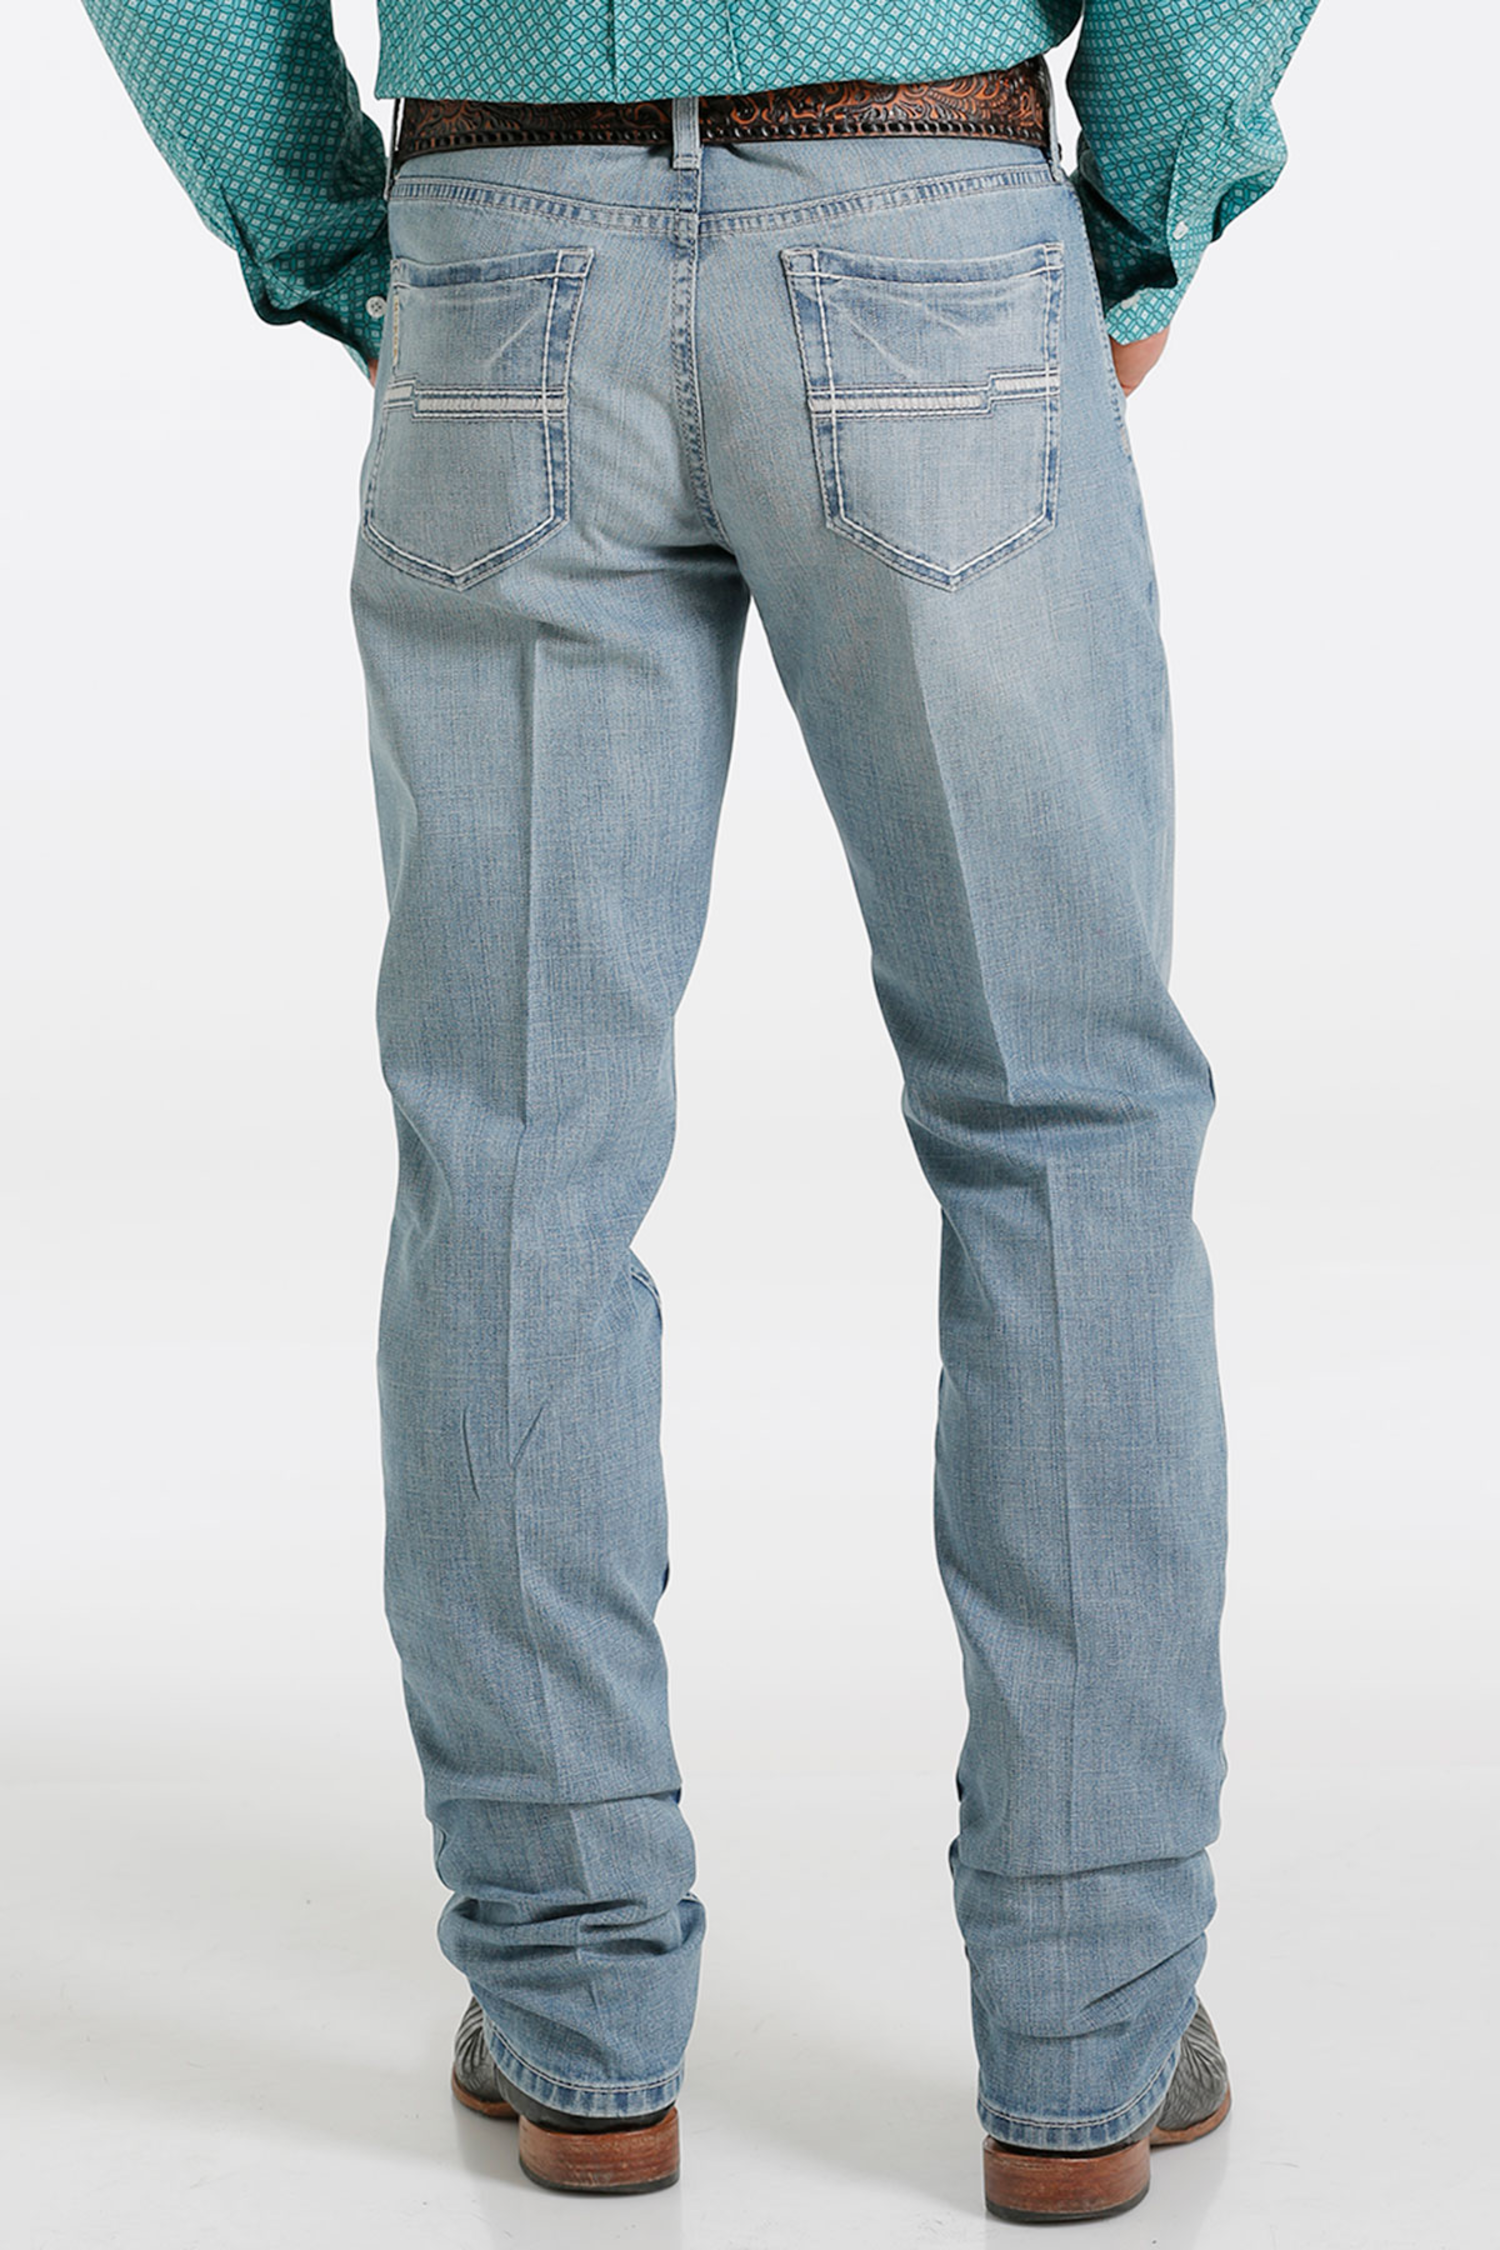 Cinch Jesse Slim Straight Fit Light Stonewash Jeans